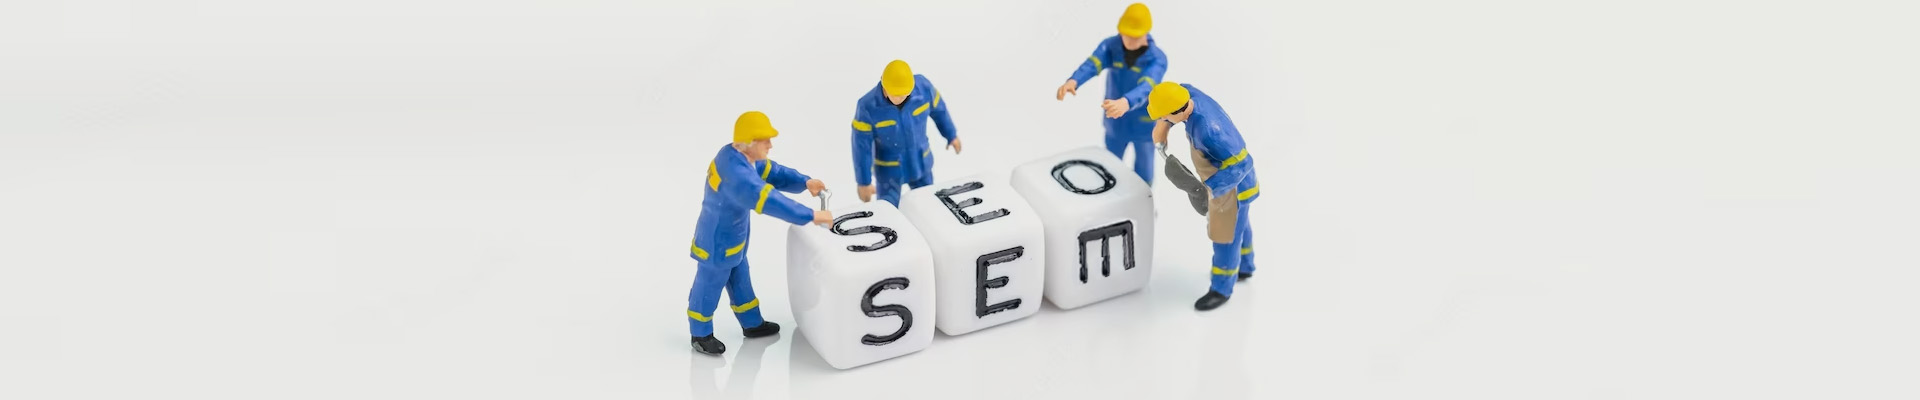 SEO vs. SEM Marketing: Key Differences & Similarities 